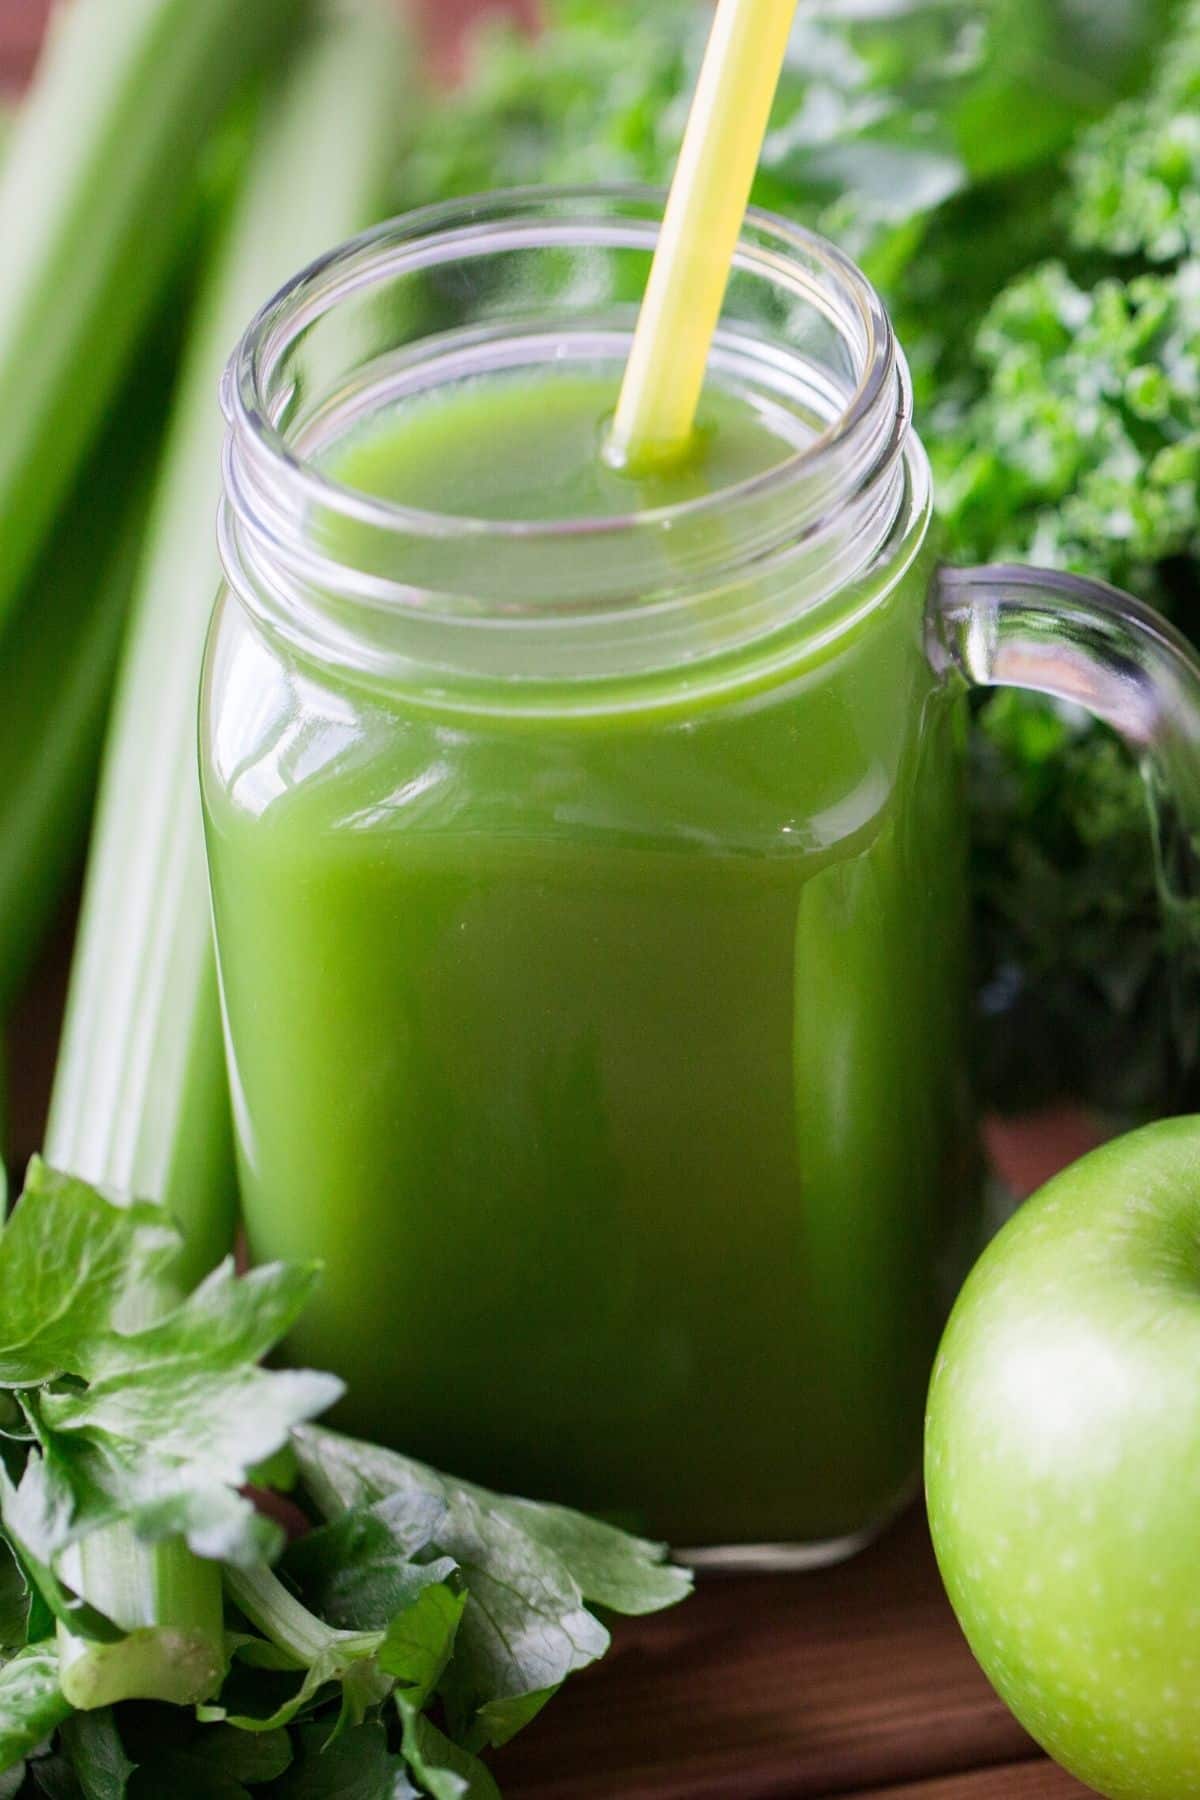 jugo verde en vaso con pajita.